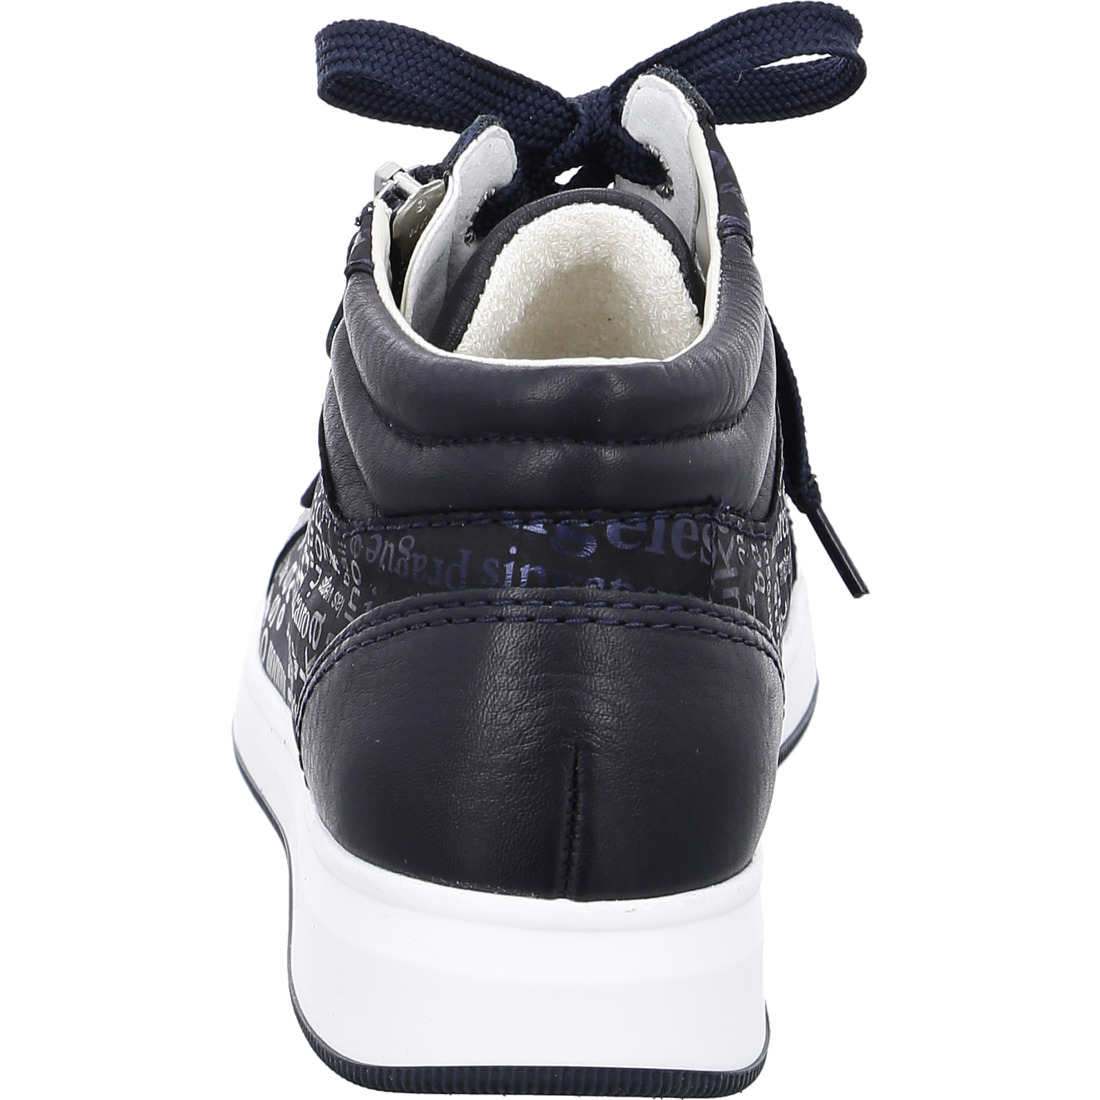 Sneakers*Ara Shoes Sneakers High top Baskets Rom